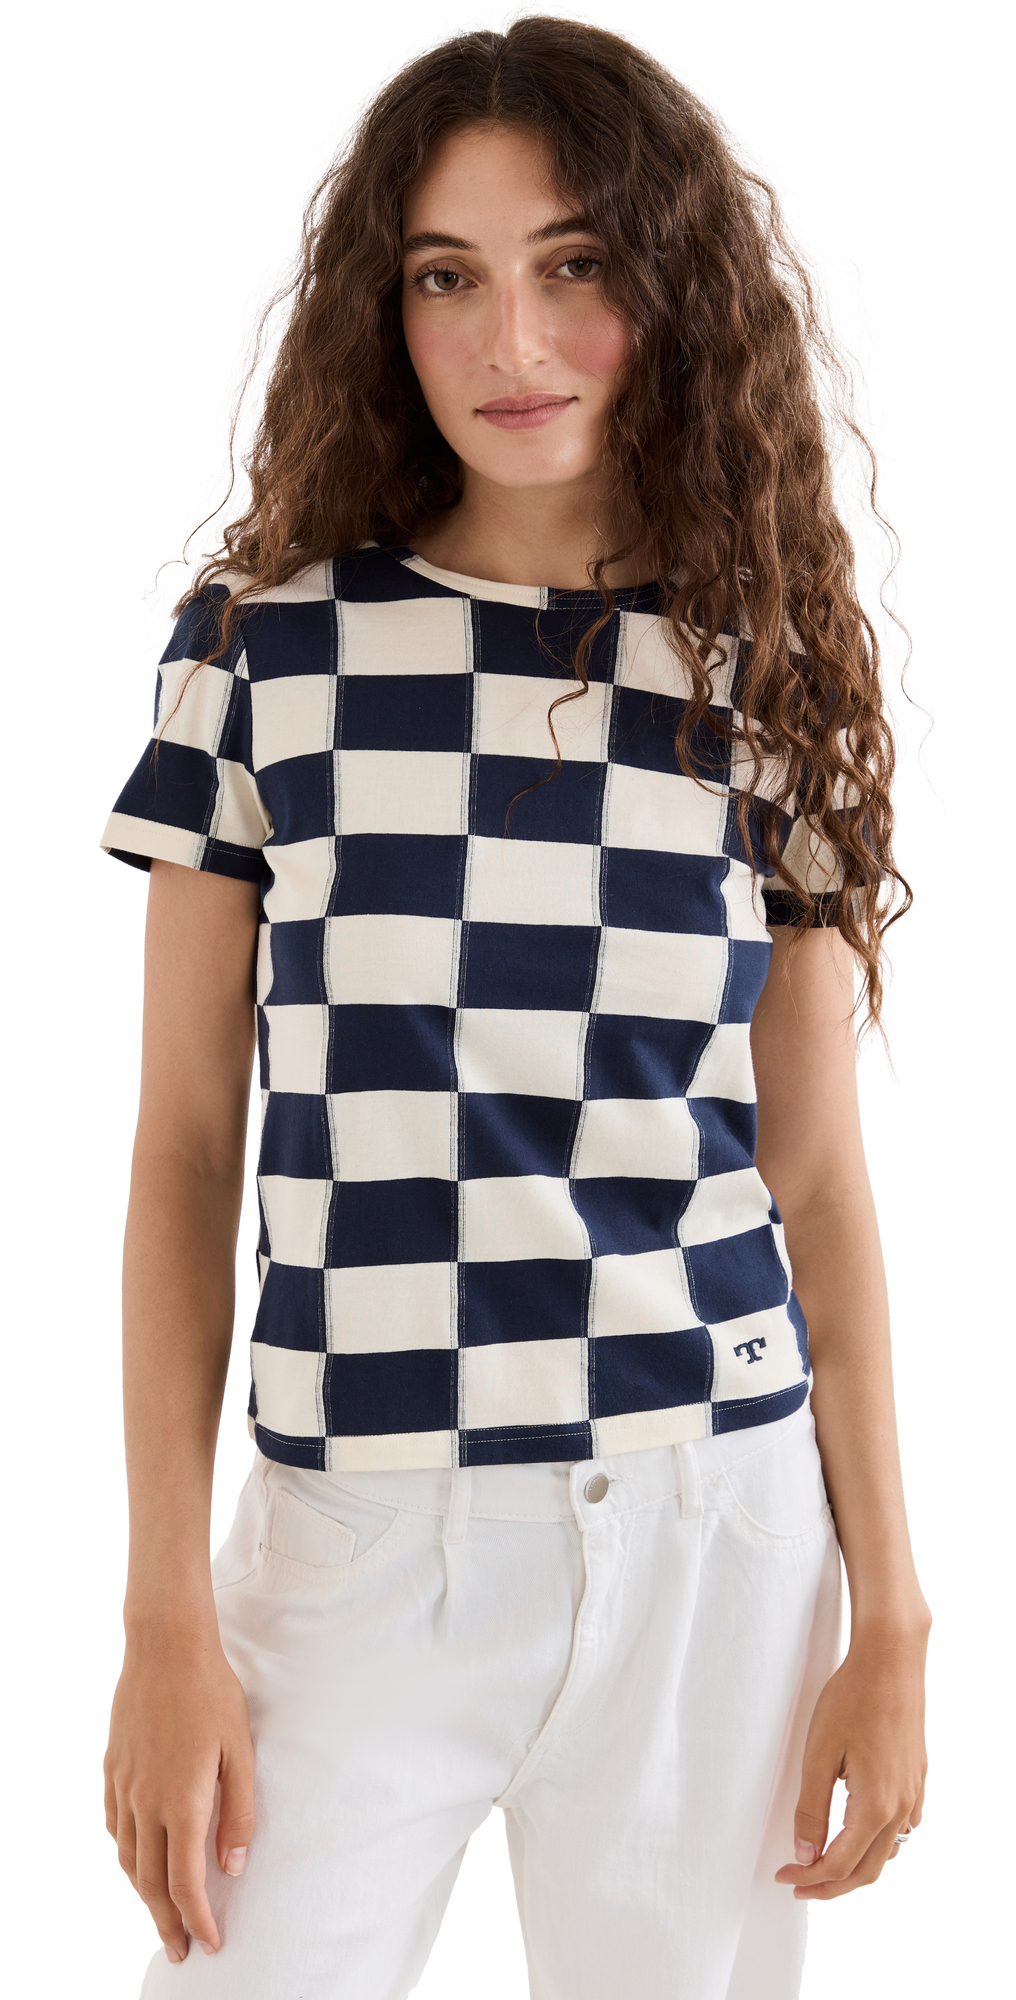 Tory Burch Checkerboard T-Shirt in navy / cream